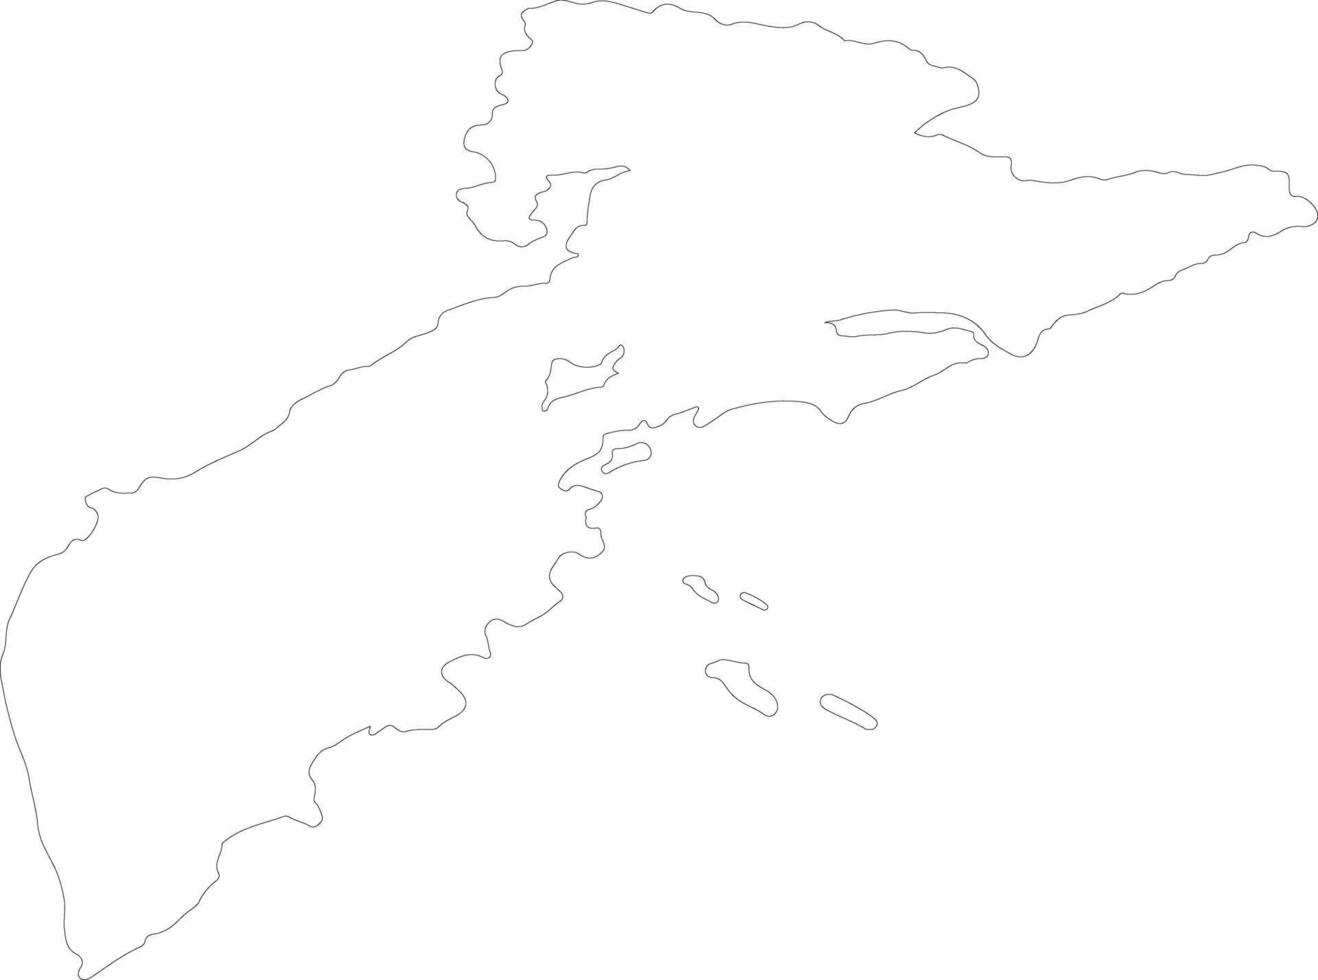 Kamchatka Russia outline map vector